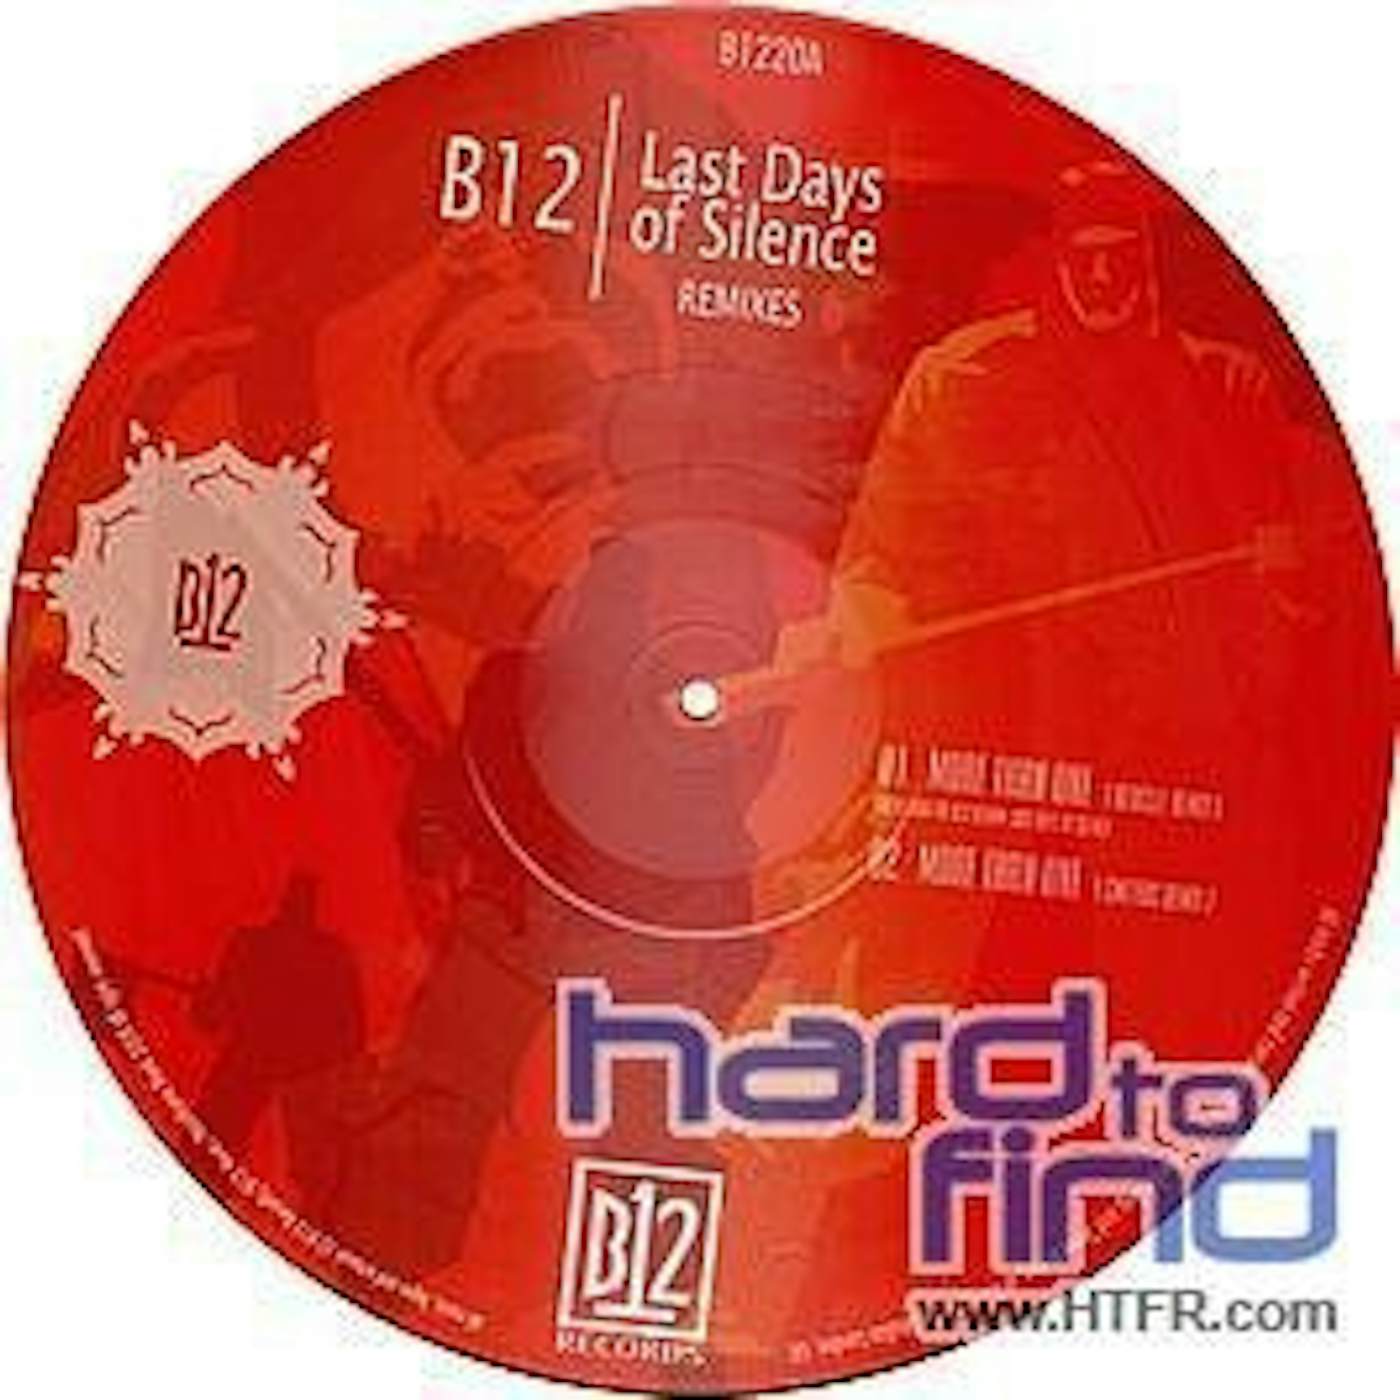 B12 LAST DAYS OF SILENCE REMIXES Vinyl Record - UK Release